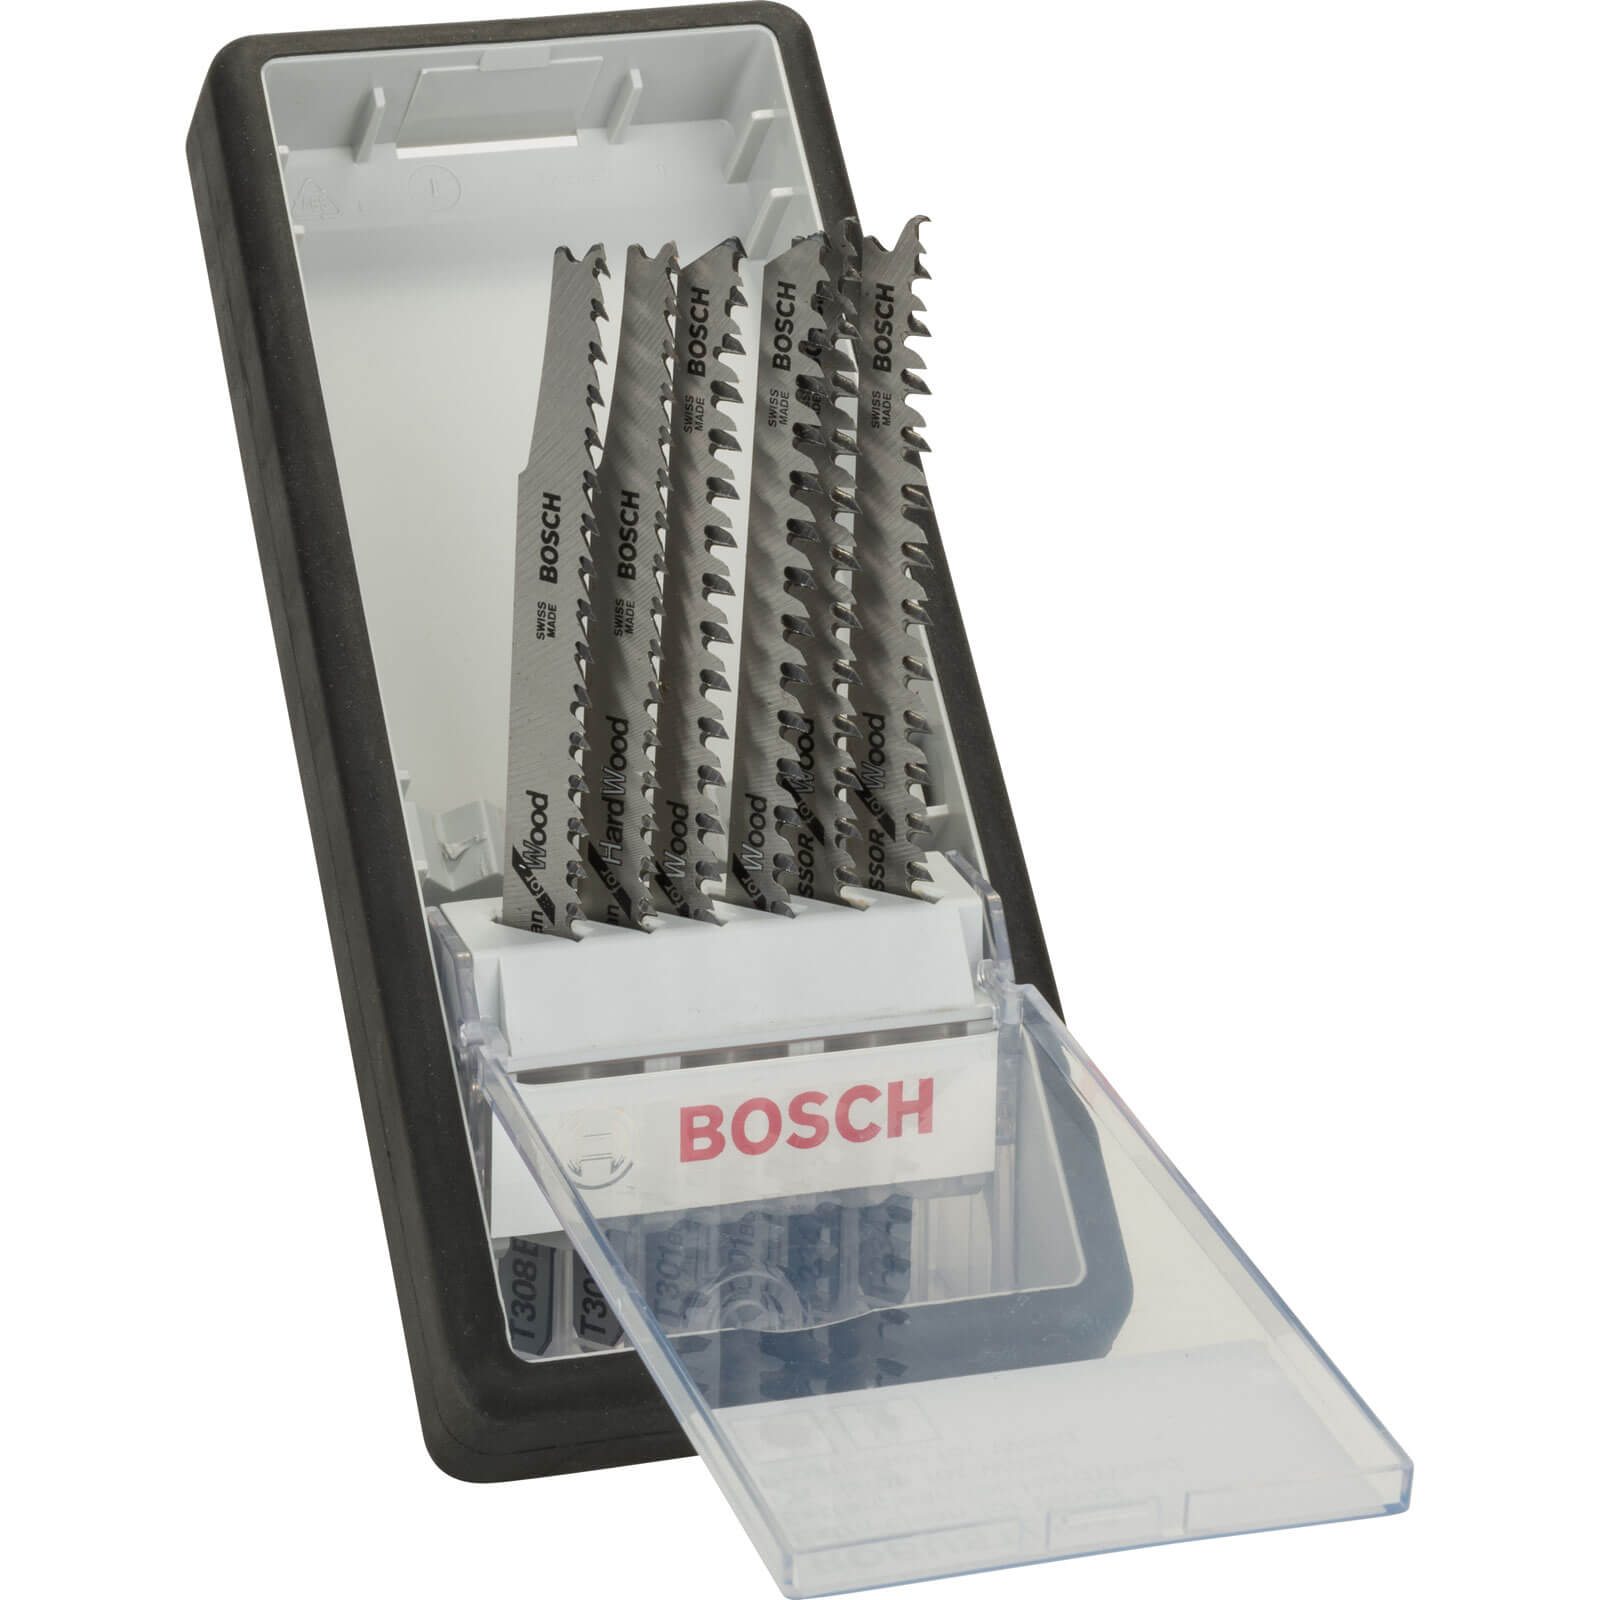 Image of Bosch 6 Piece Wood Cutting Jigsaw Blade Set